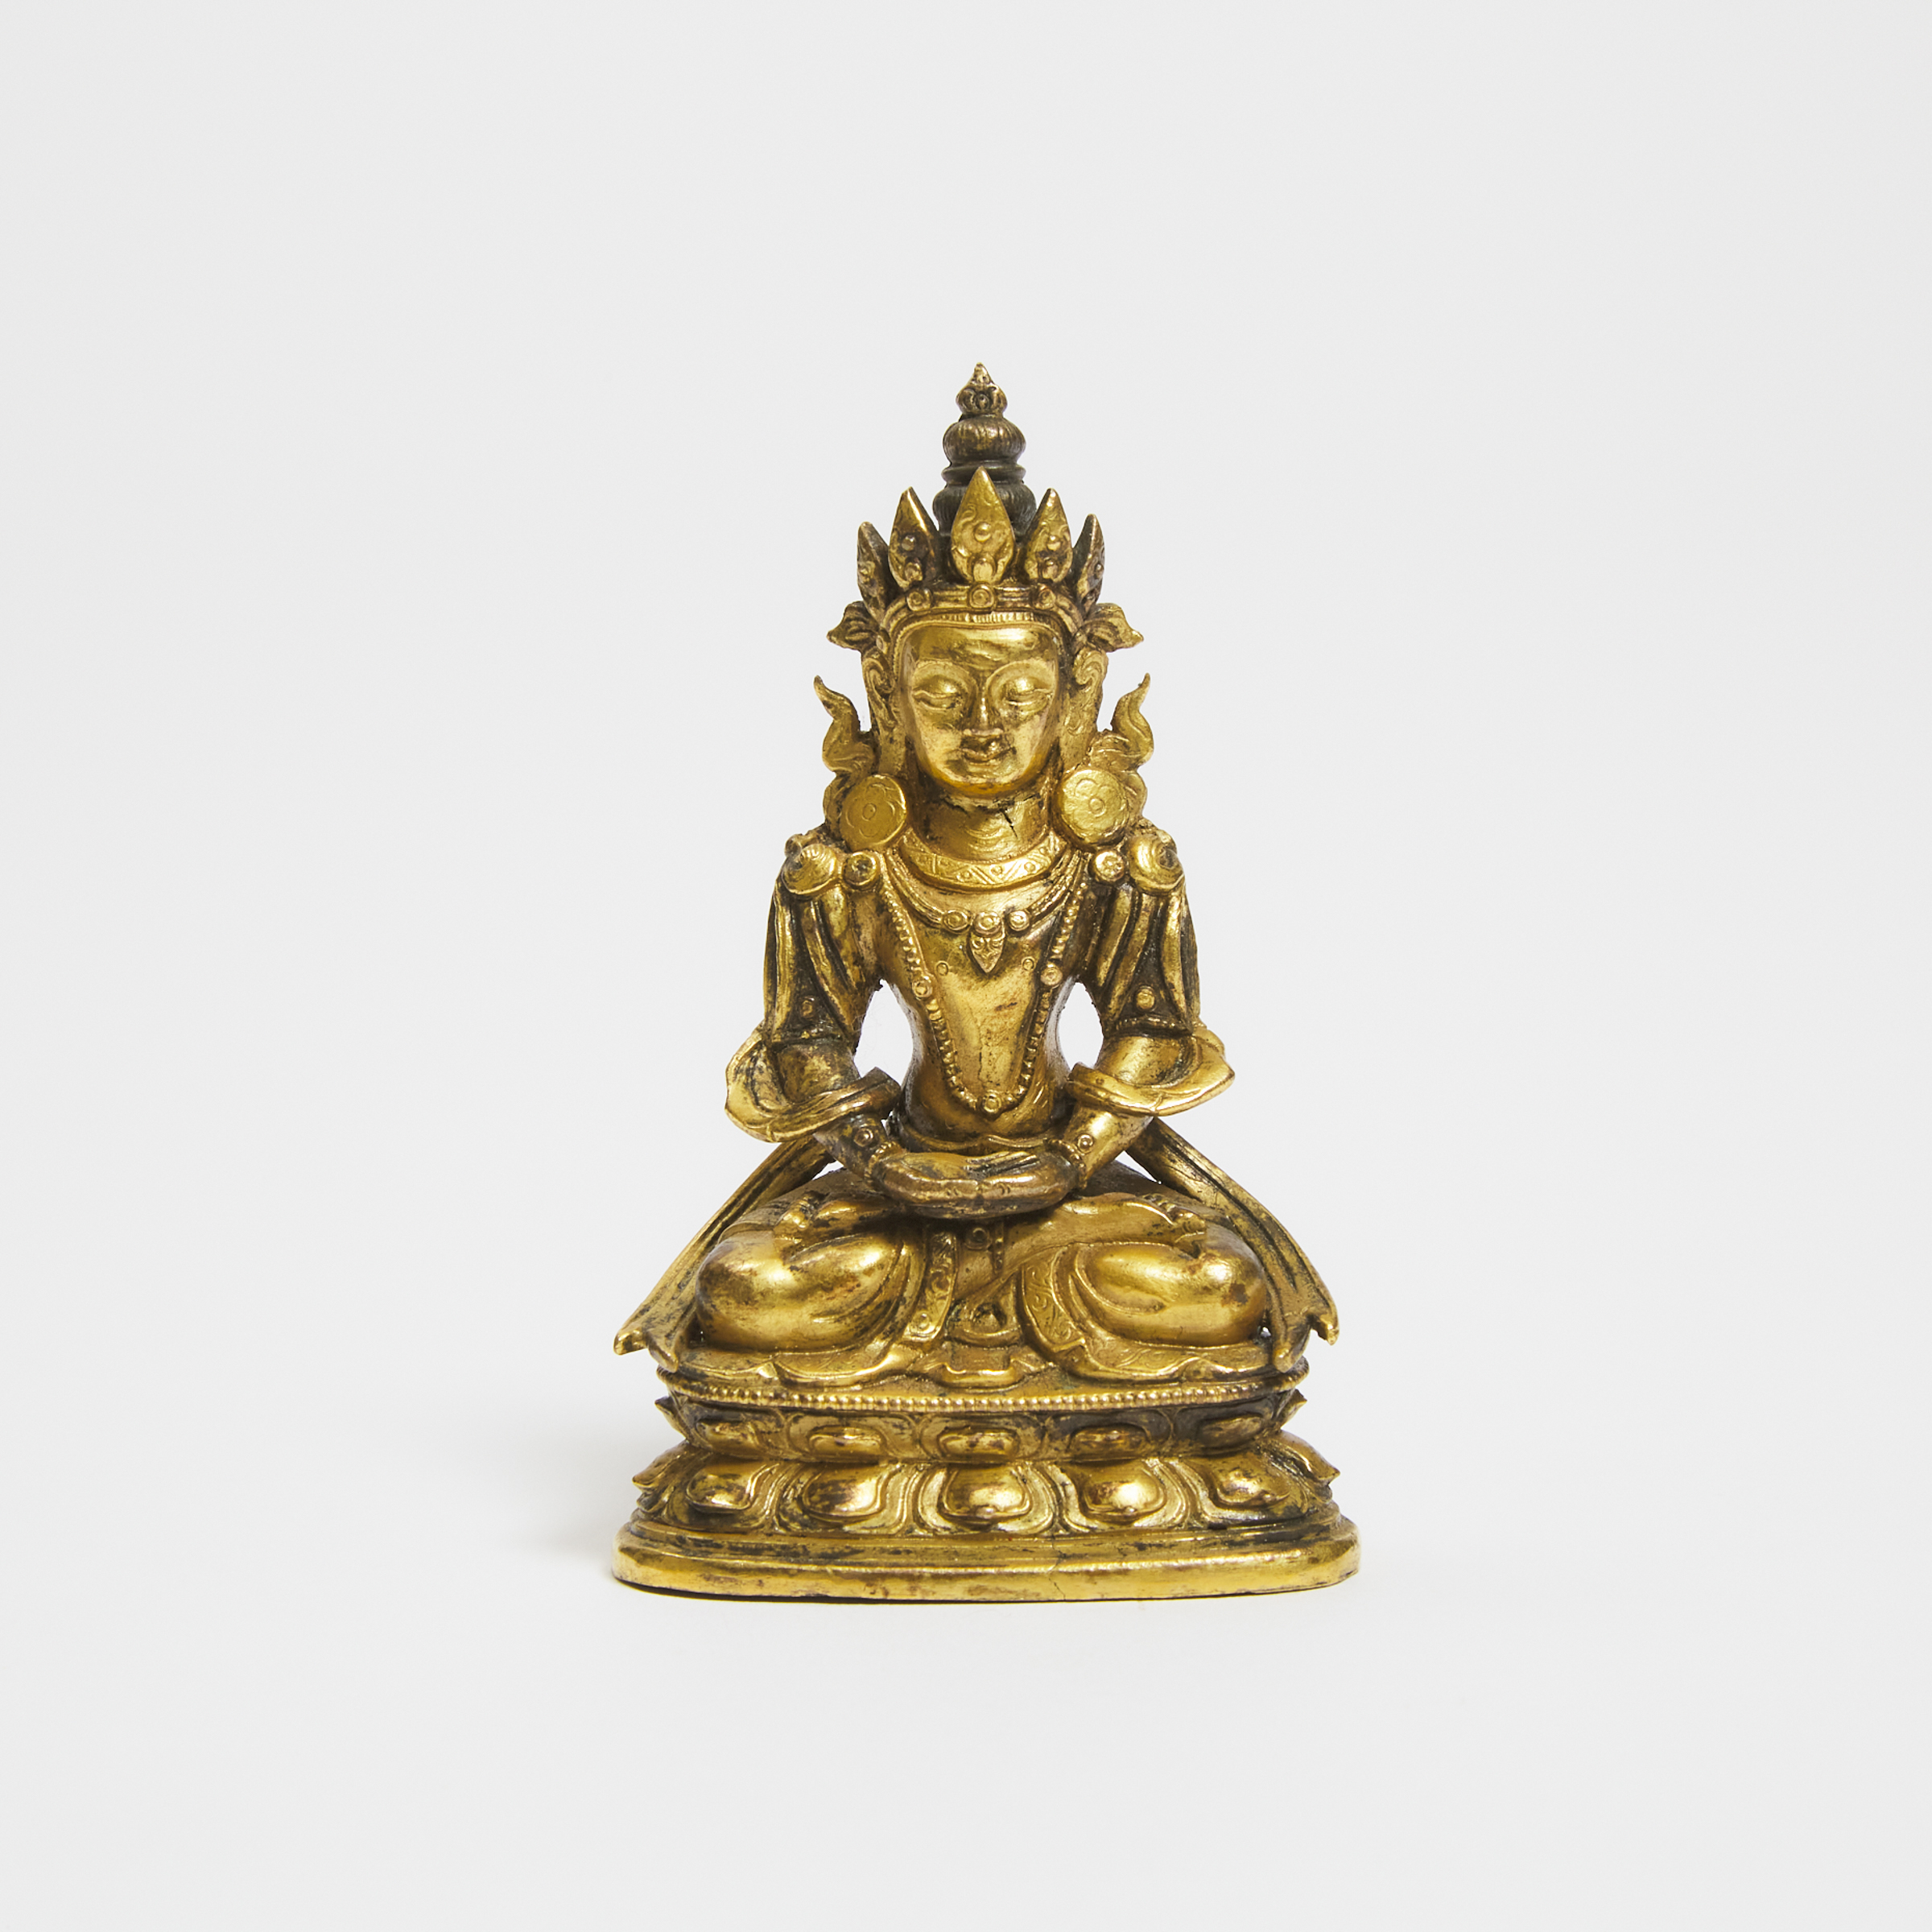 A Small Tibetan Gilt Bronze Seated Figure of Buddha, 18th Century